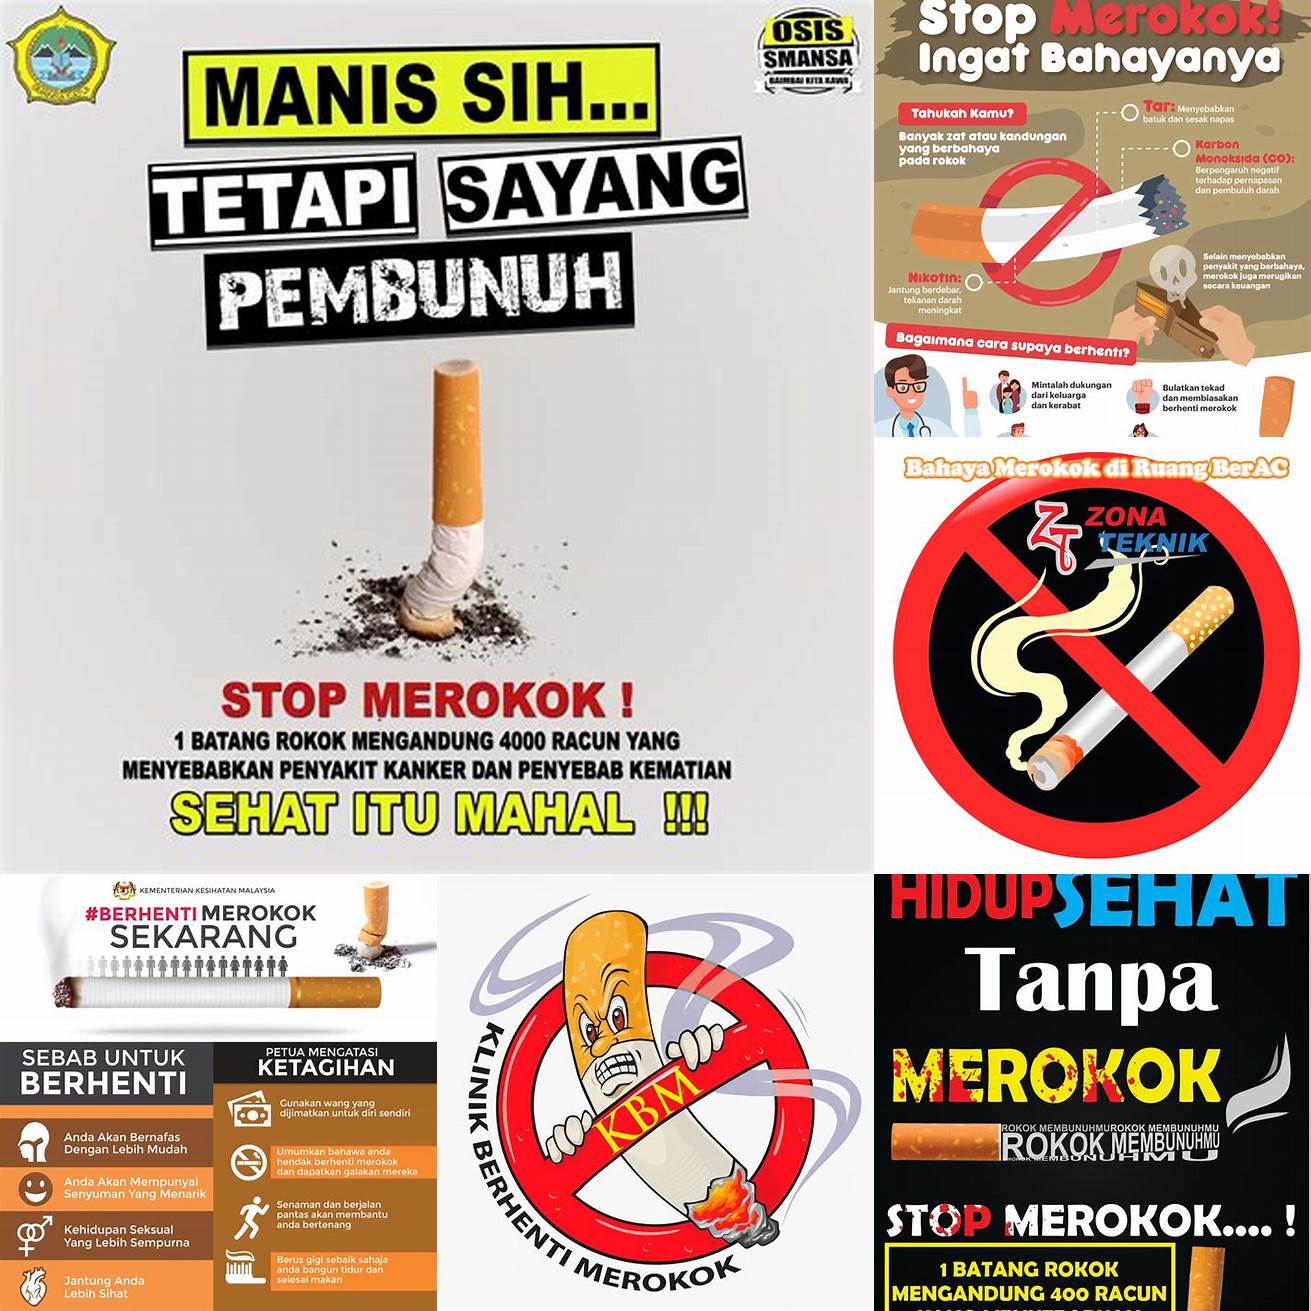 Jangan merokok